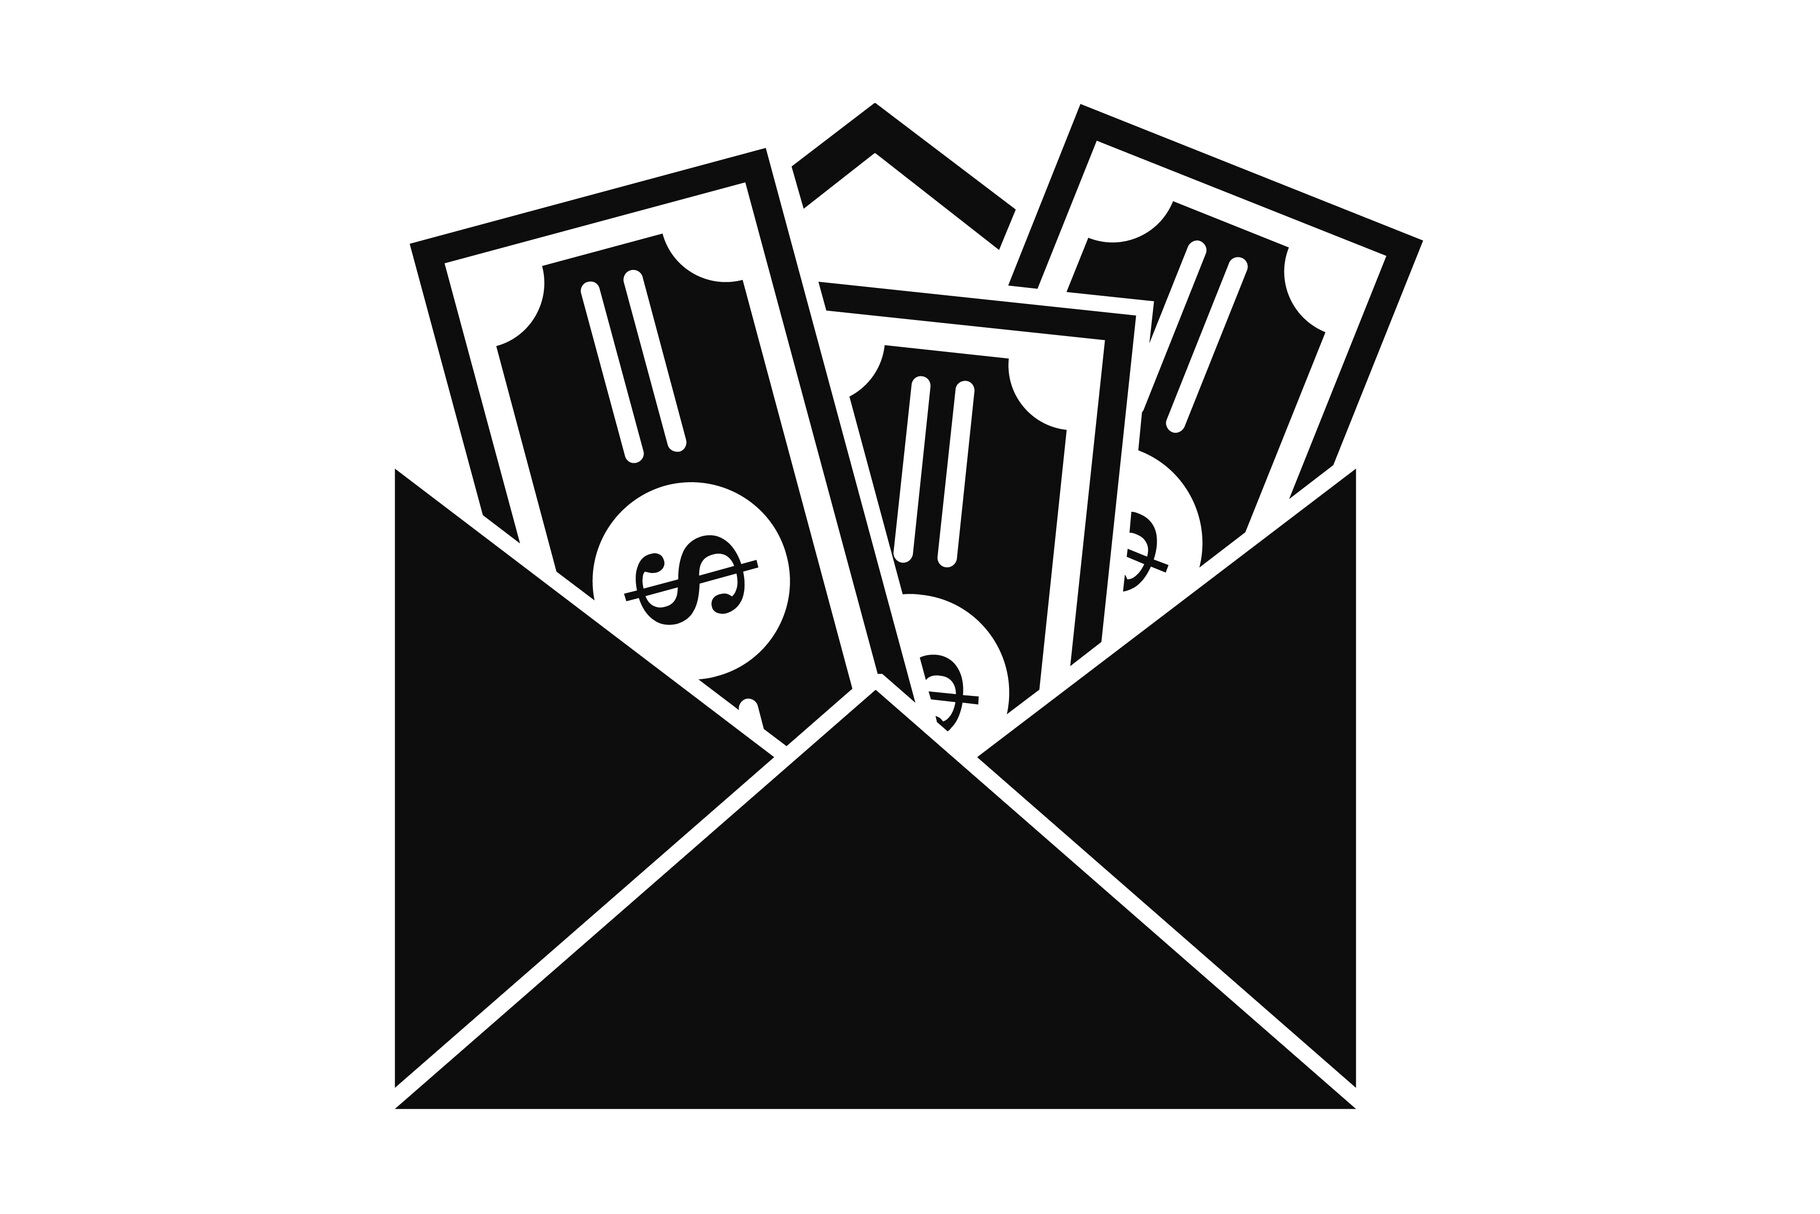 Corruption money bag icon, simple style By Anatolir56